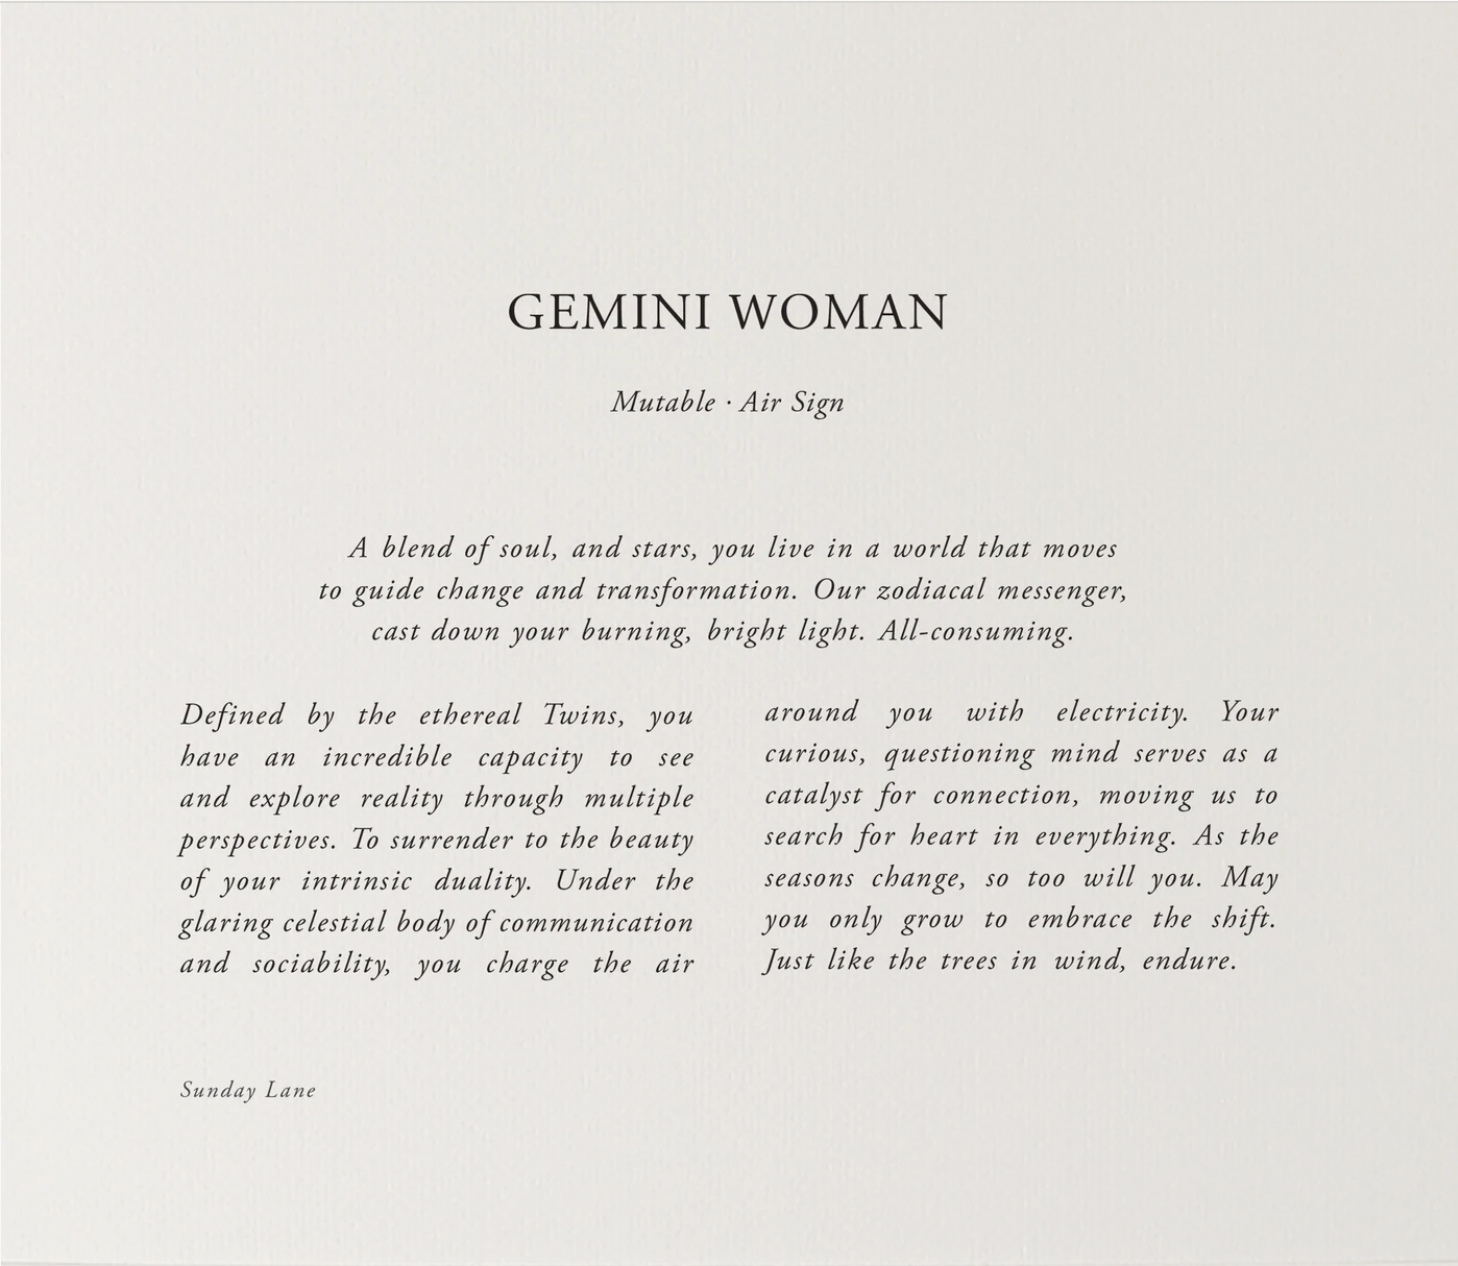 Sunday Lane Gemini Woman 05